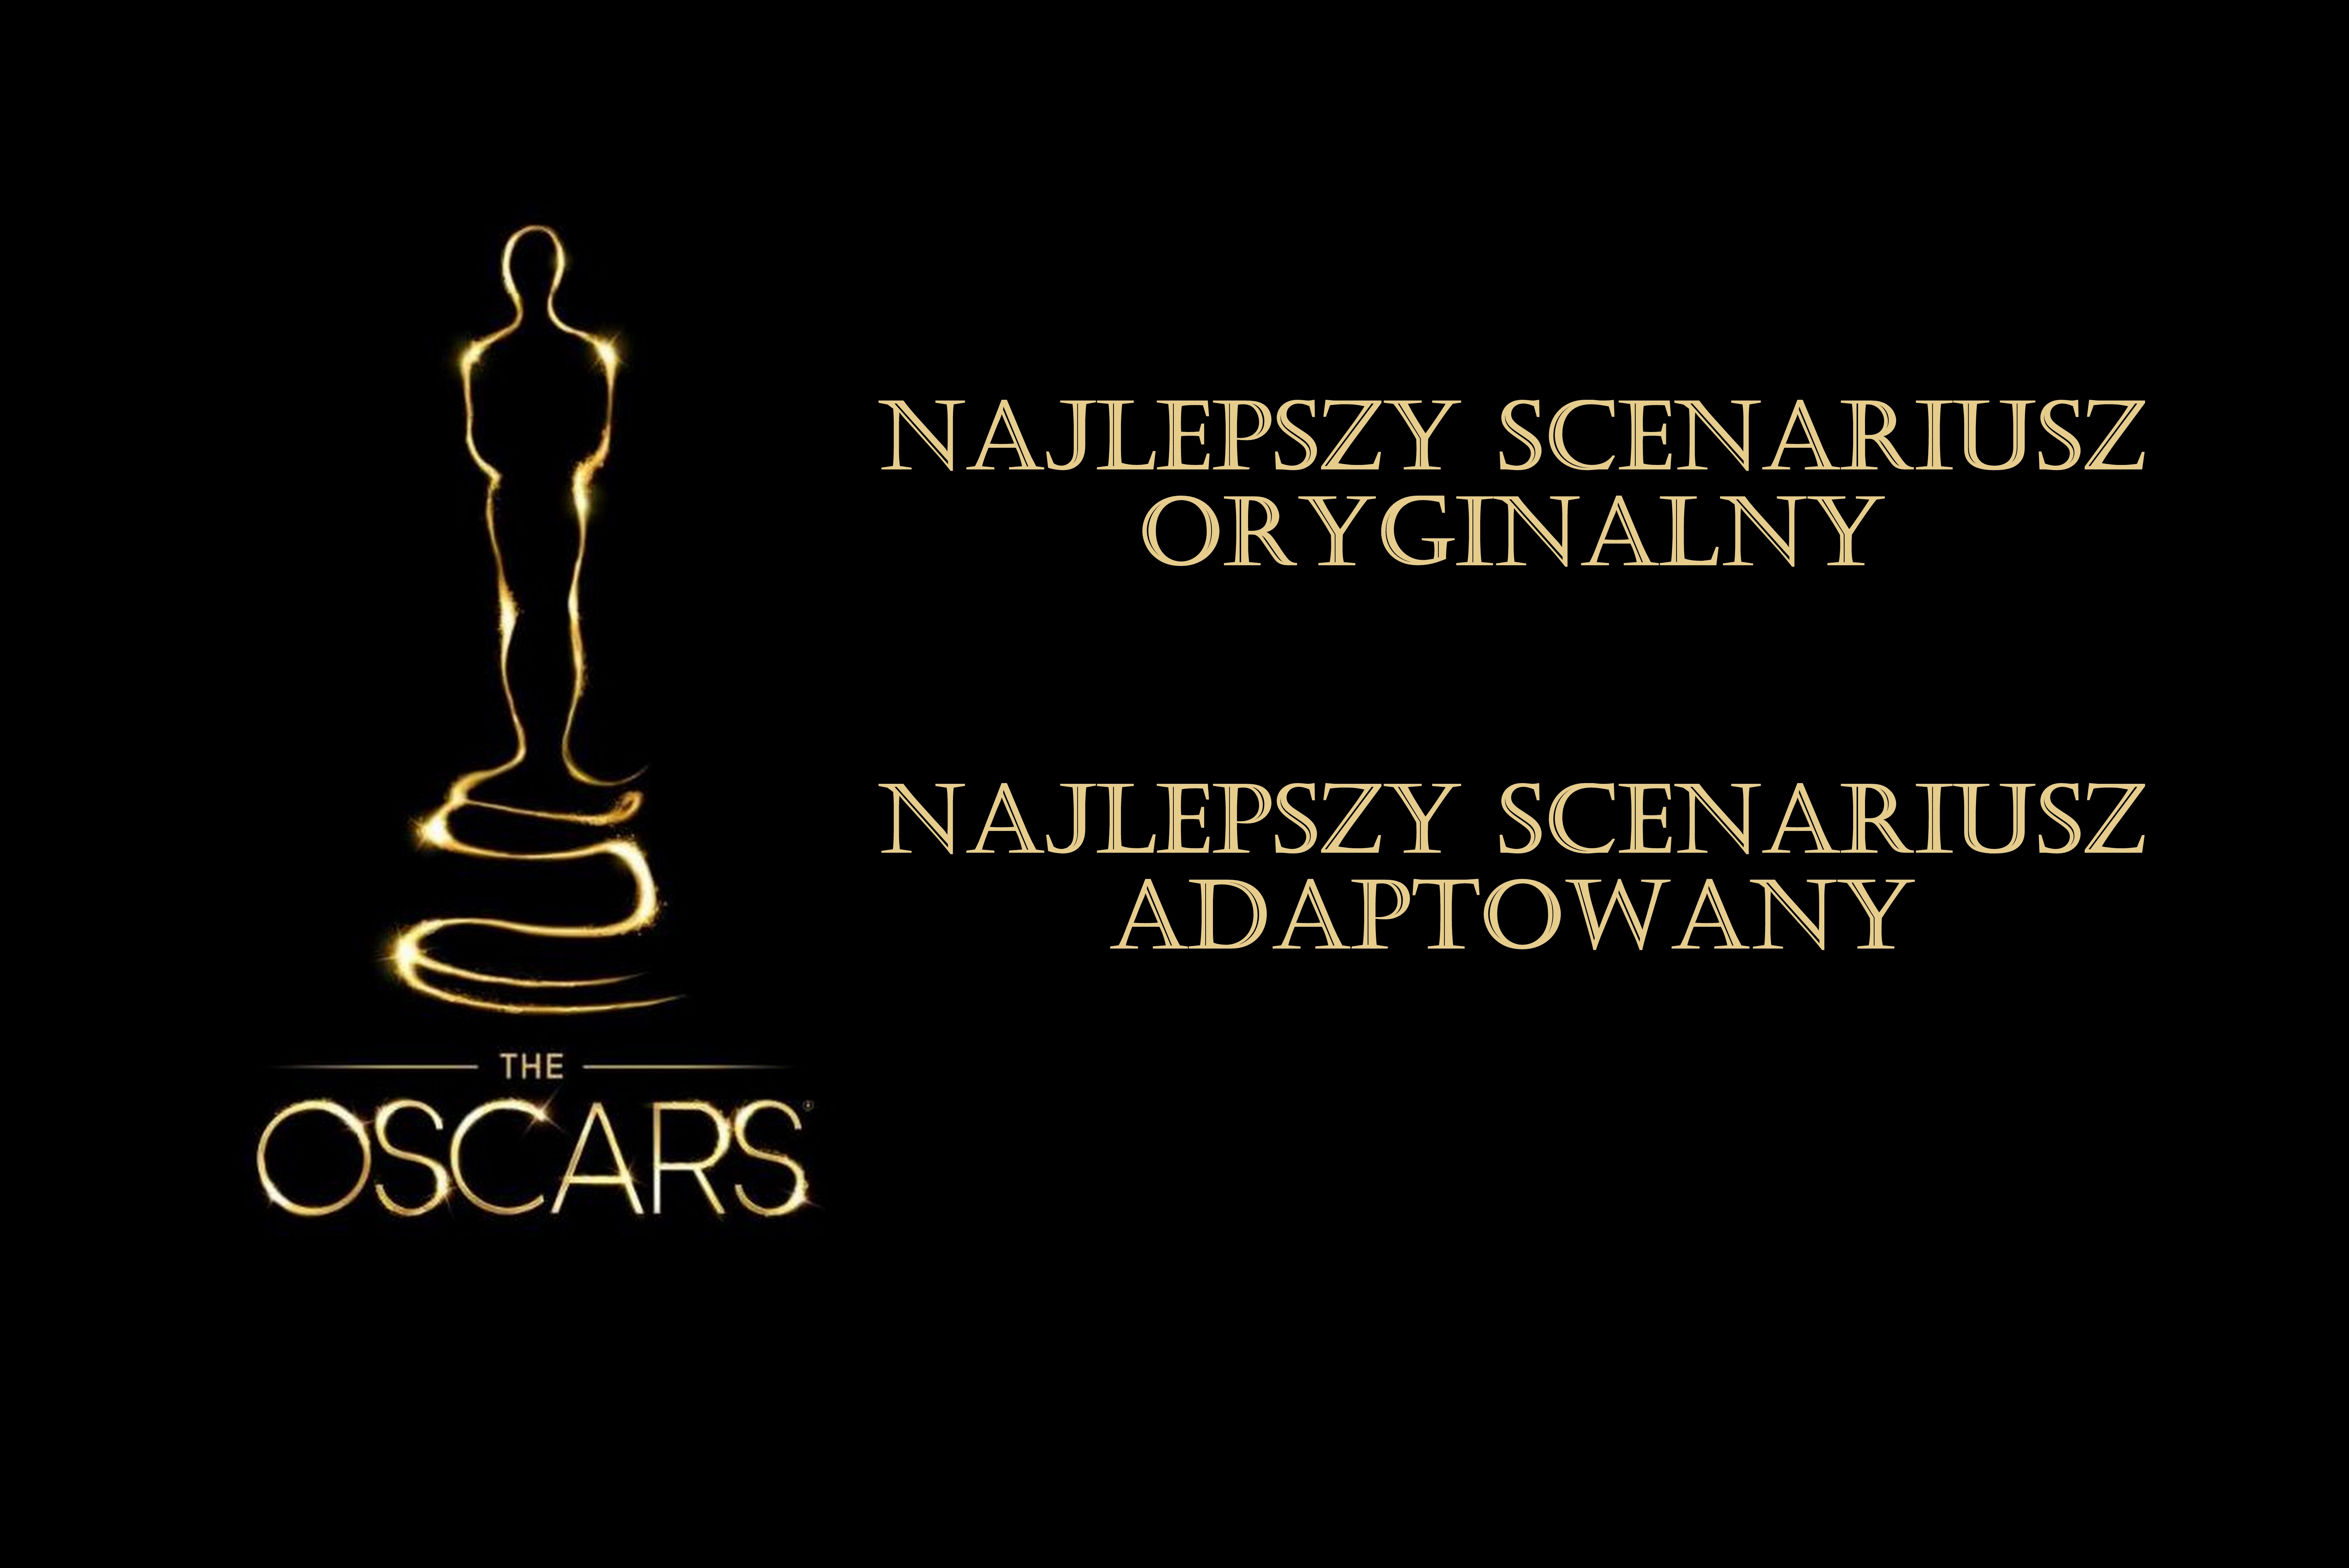 Oscary 2014: Oho, znowu narkotyki